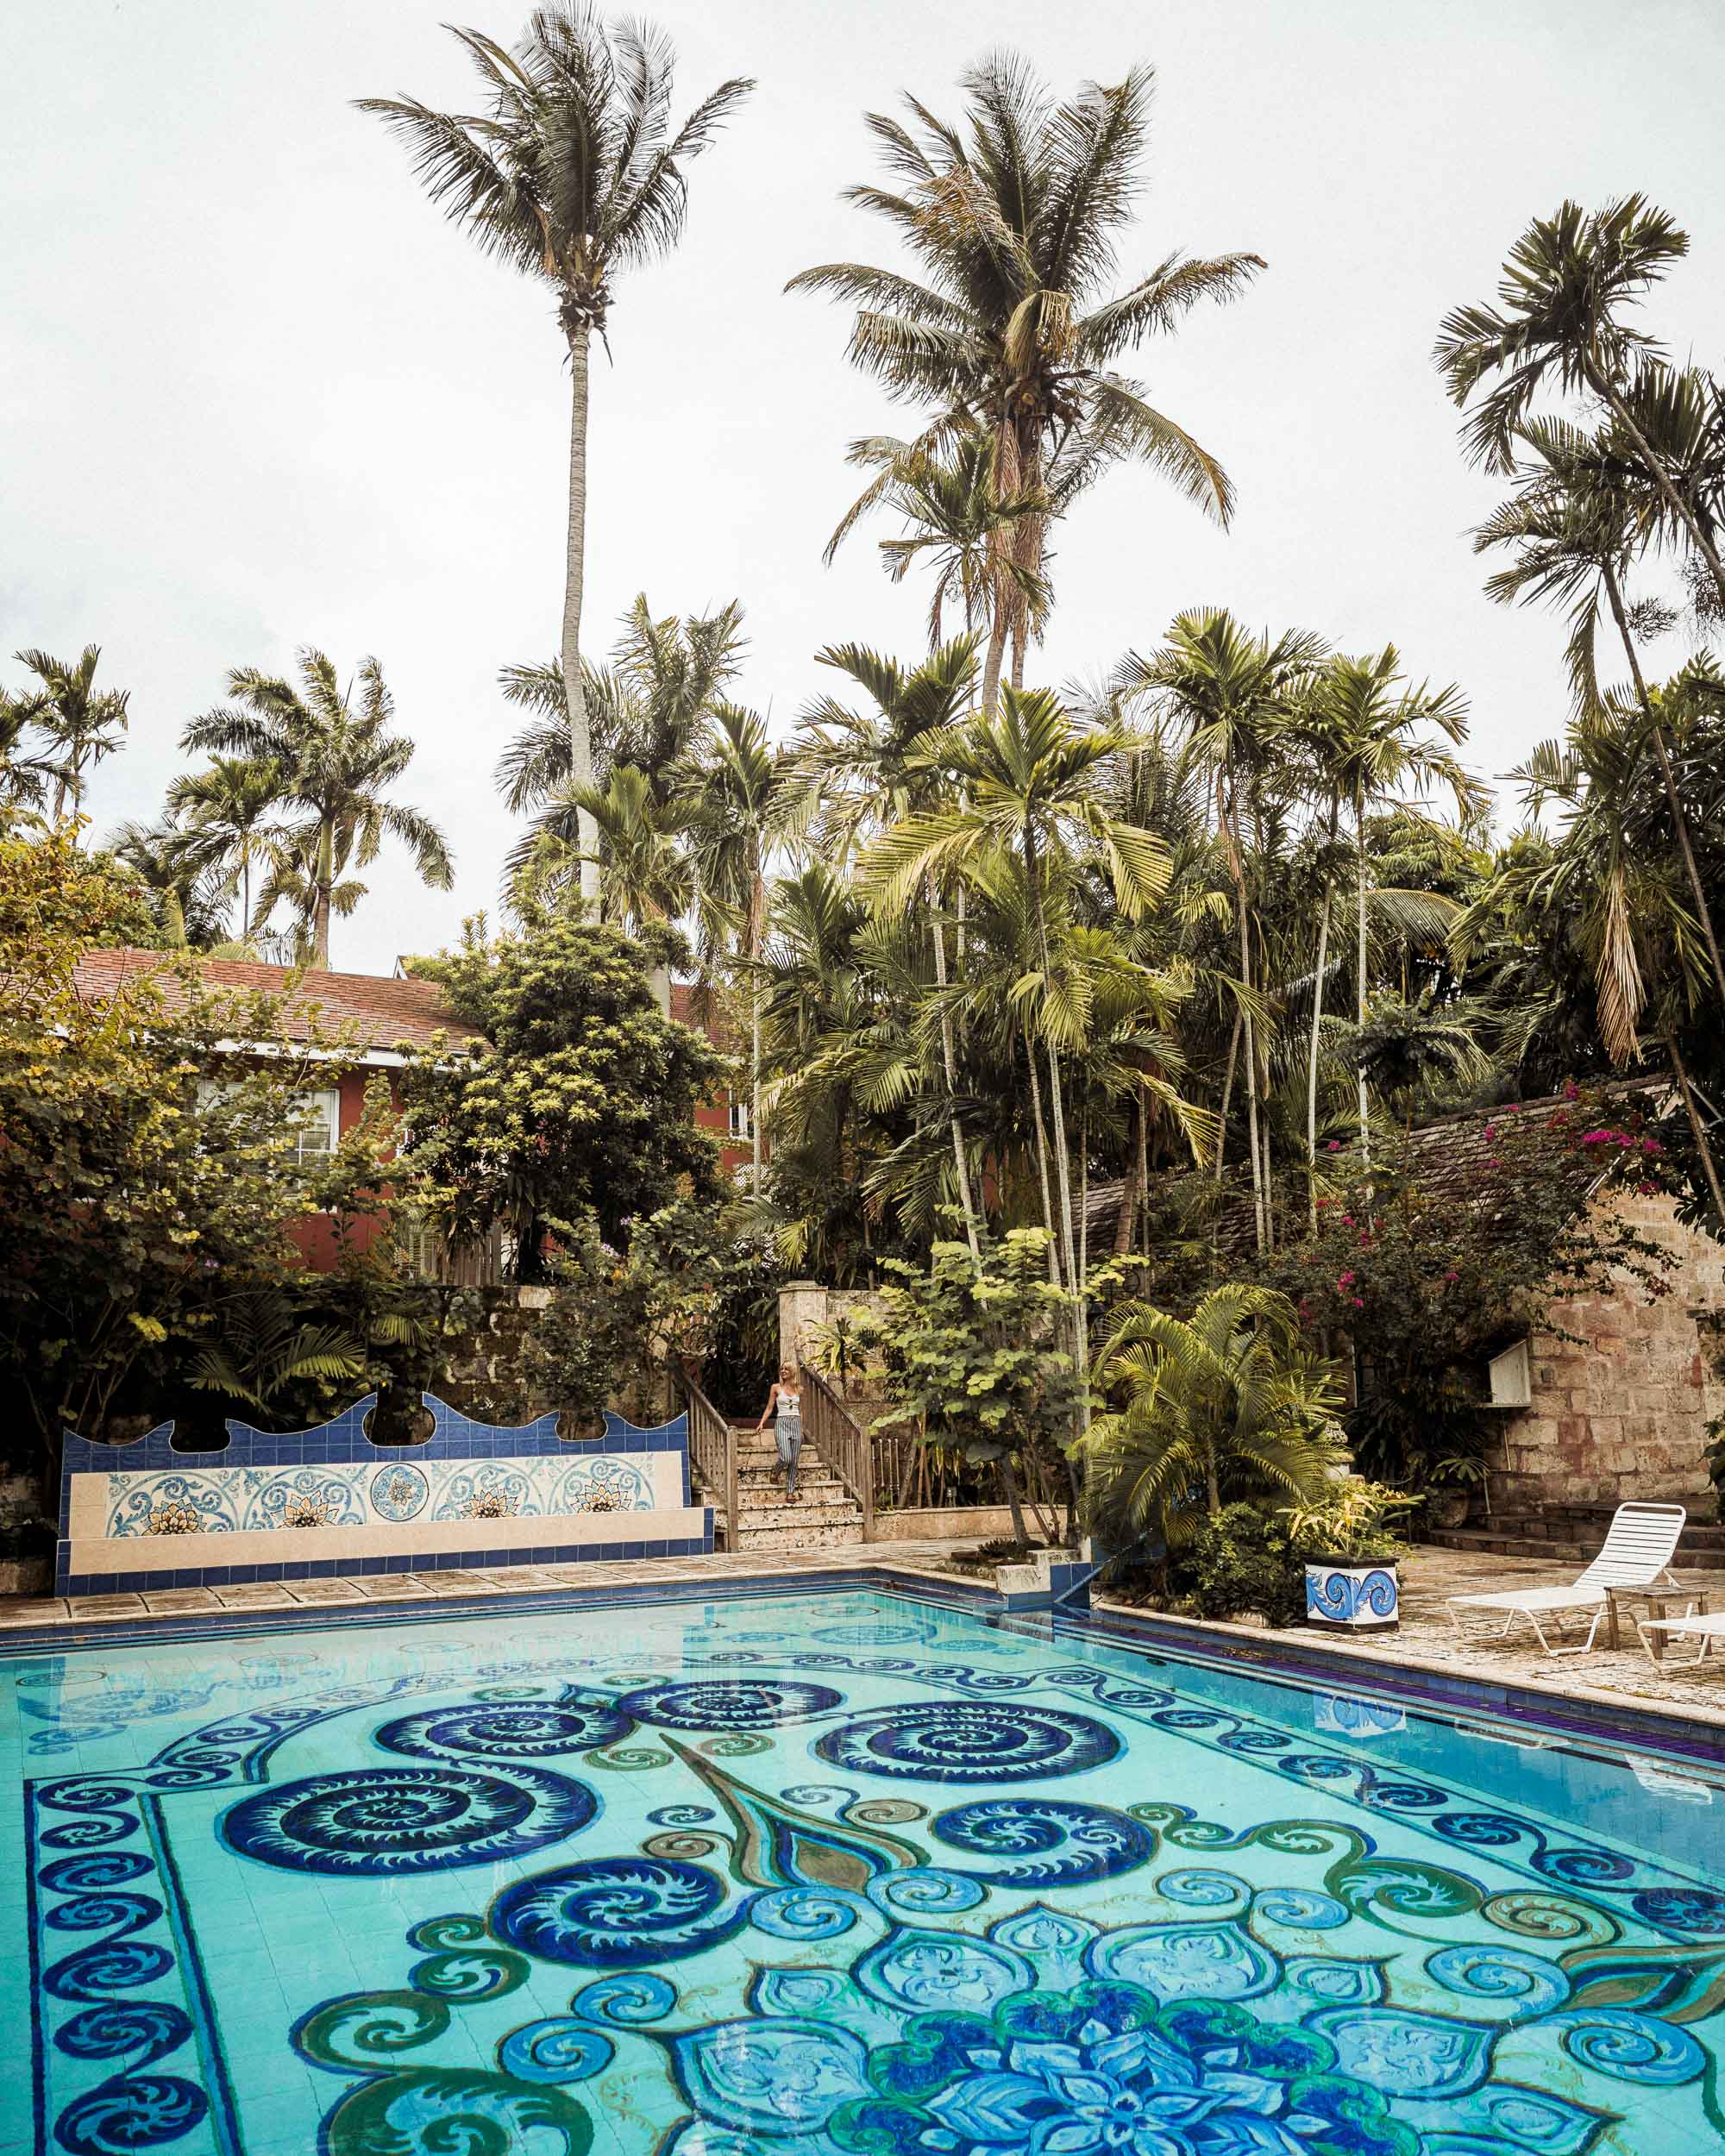 Graycliff hotel and pool in Nassau Bahamas